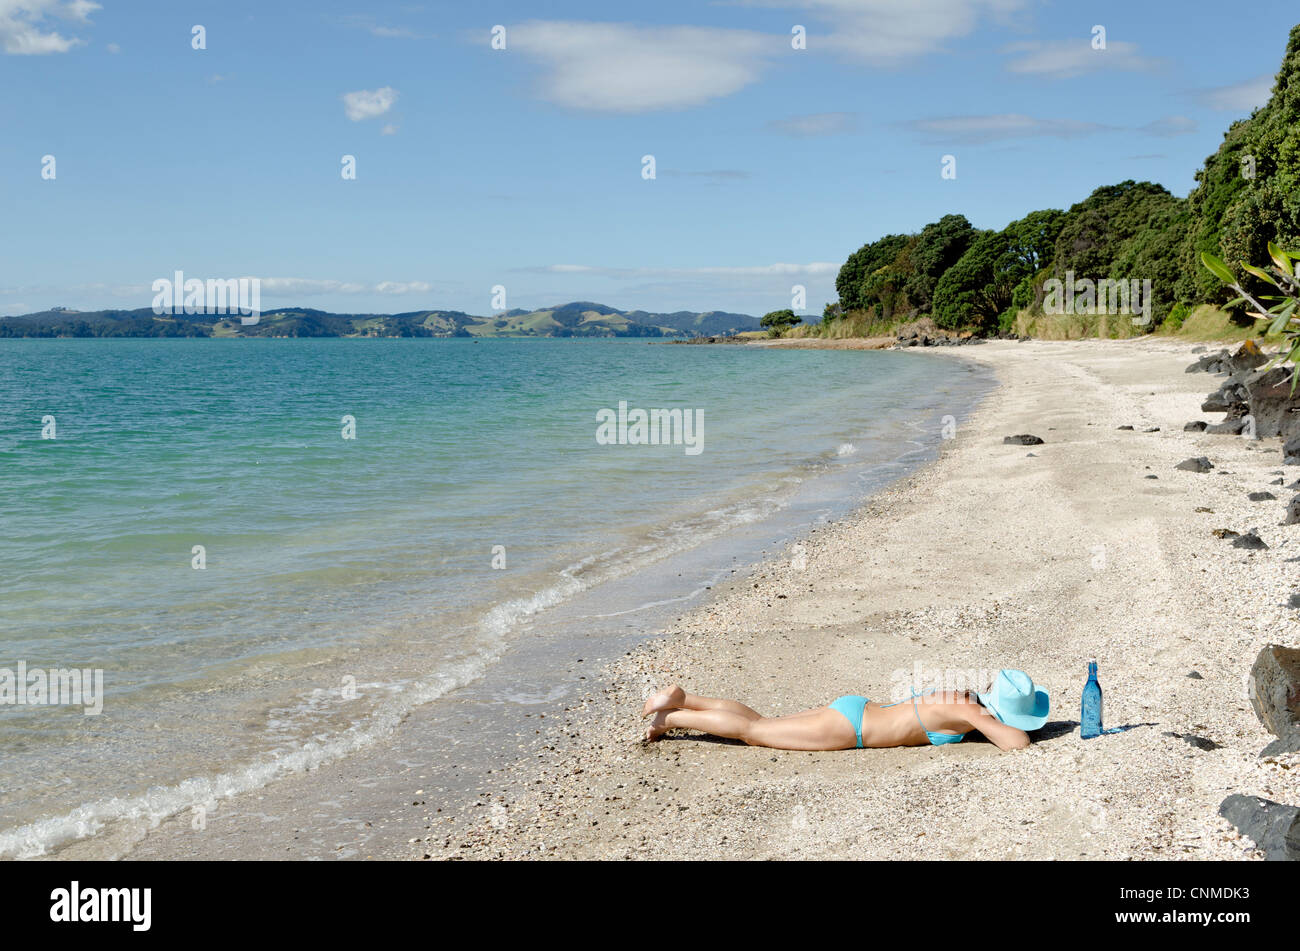 A woman sunbathing alone on an empty new Zealand beach. Stock Photo